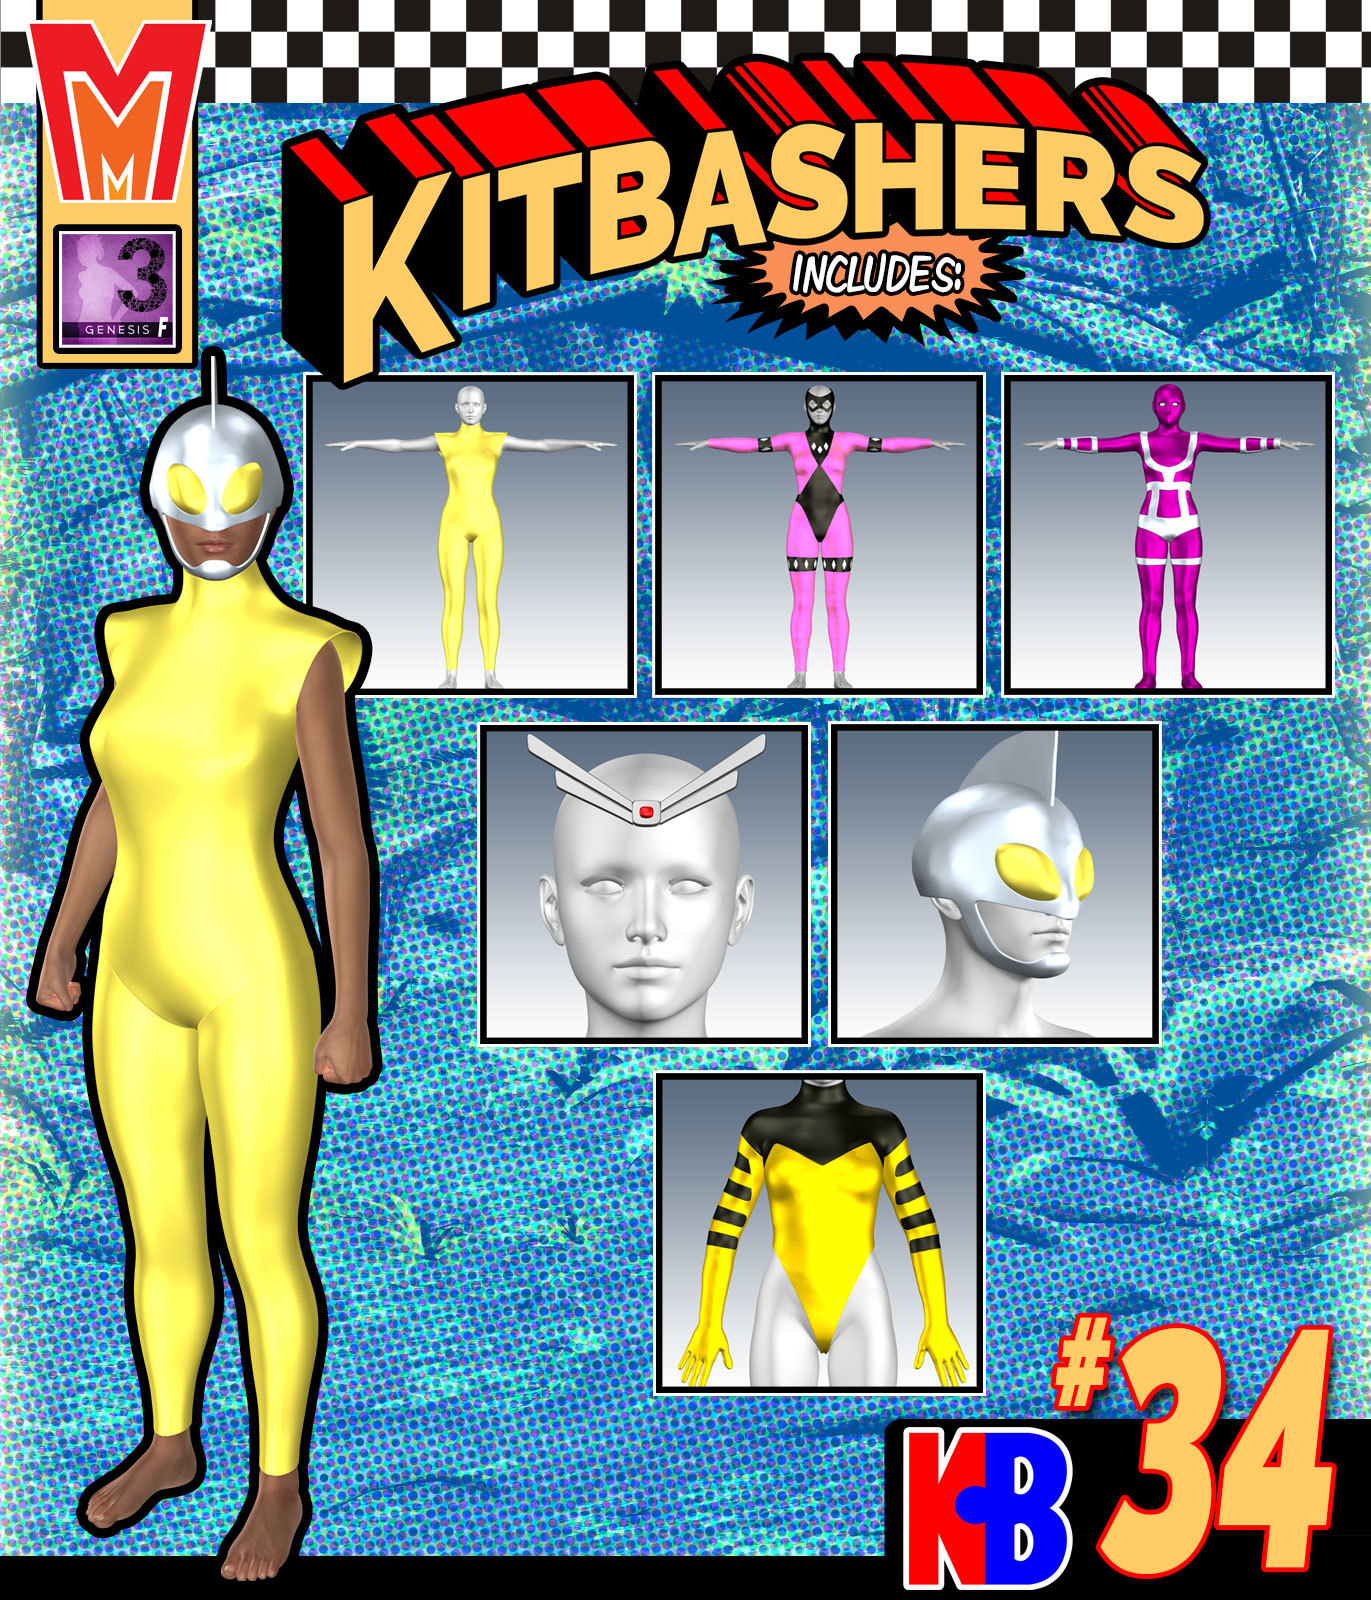 Kitbashers 034 MMG3F by: MightyMite, 3D Models by Daz 3D